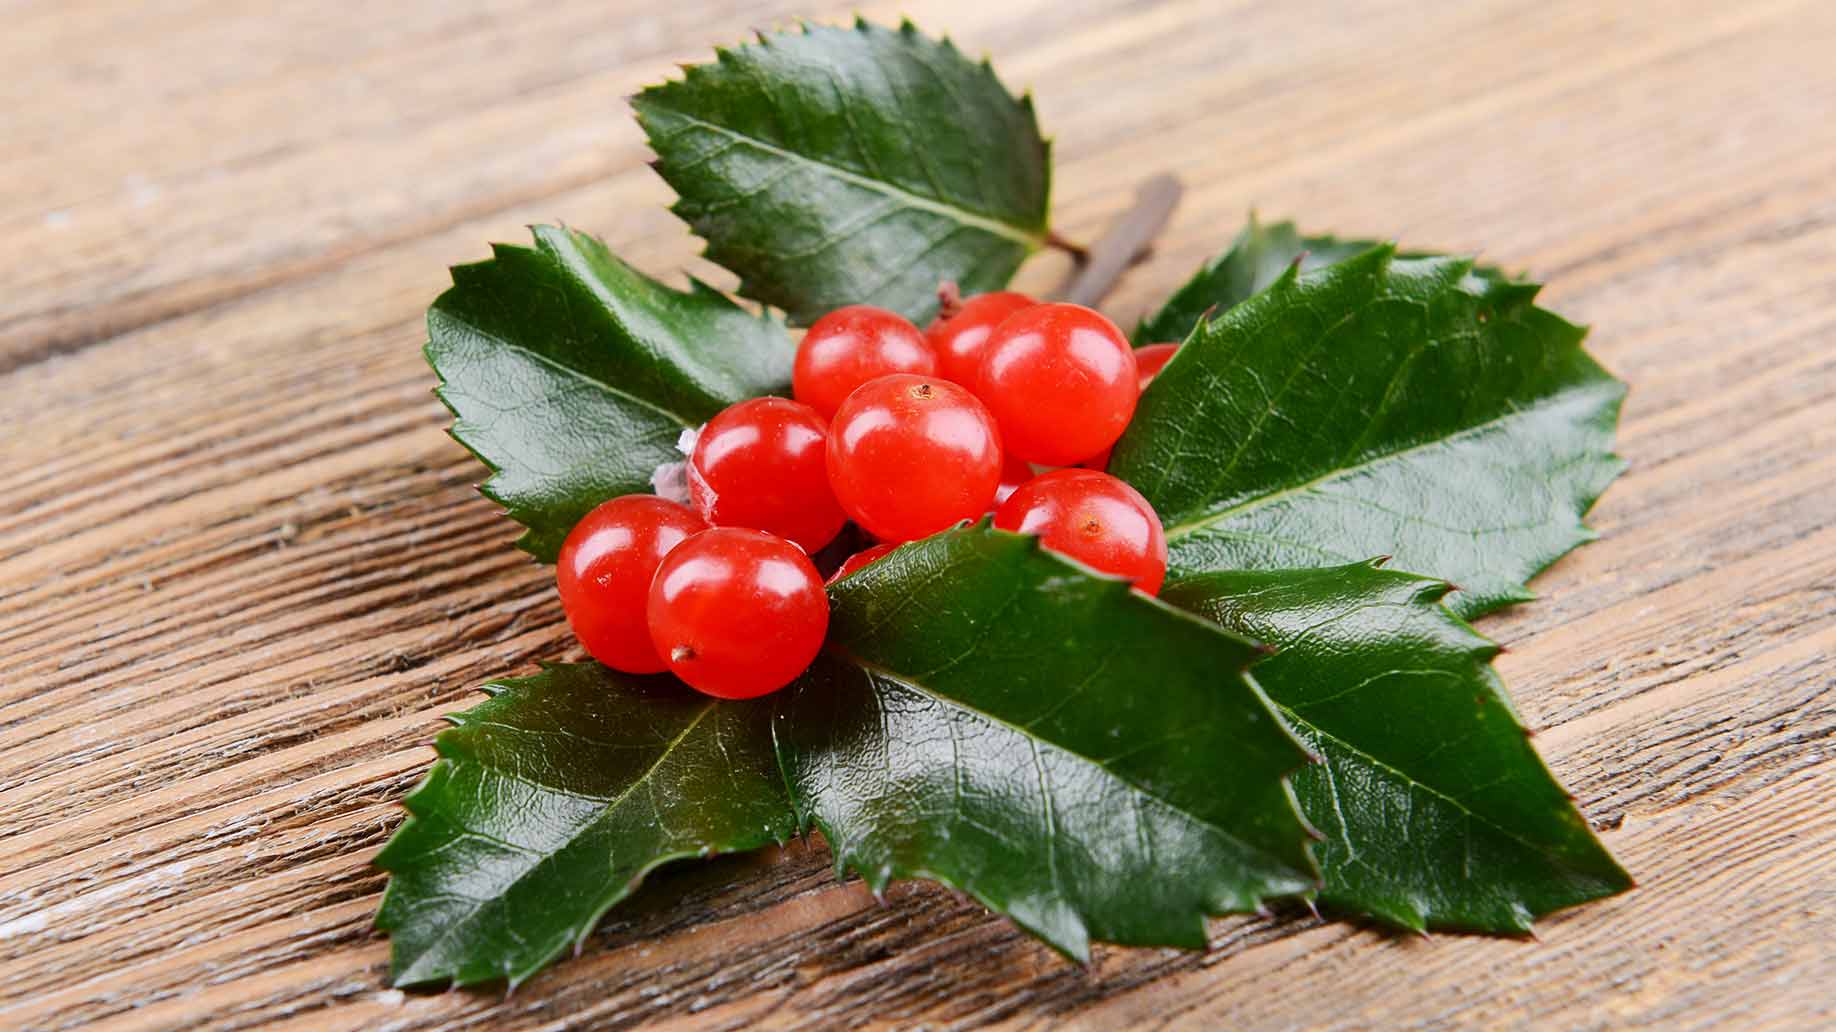 mistletoe herb red berries green leaves natural remedy lowers high blood pressure hypertension